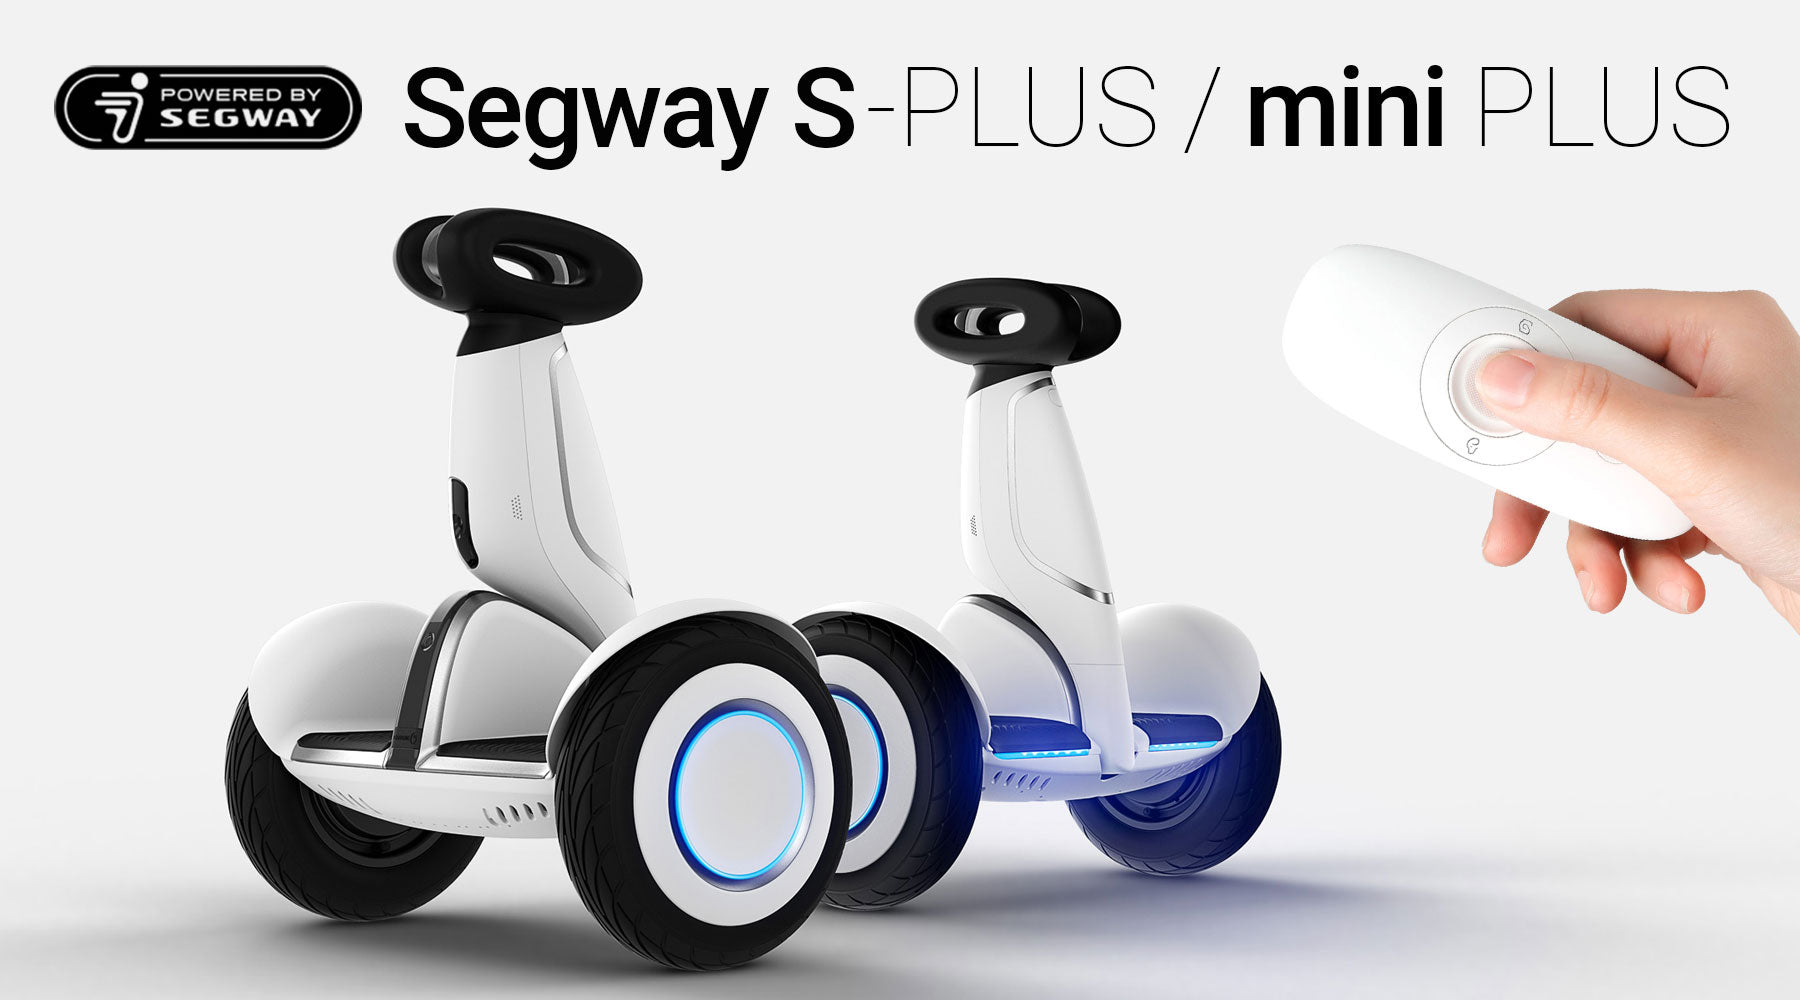 Segway S-PLUS / mini PLUS